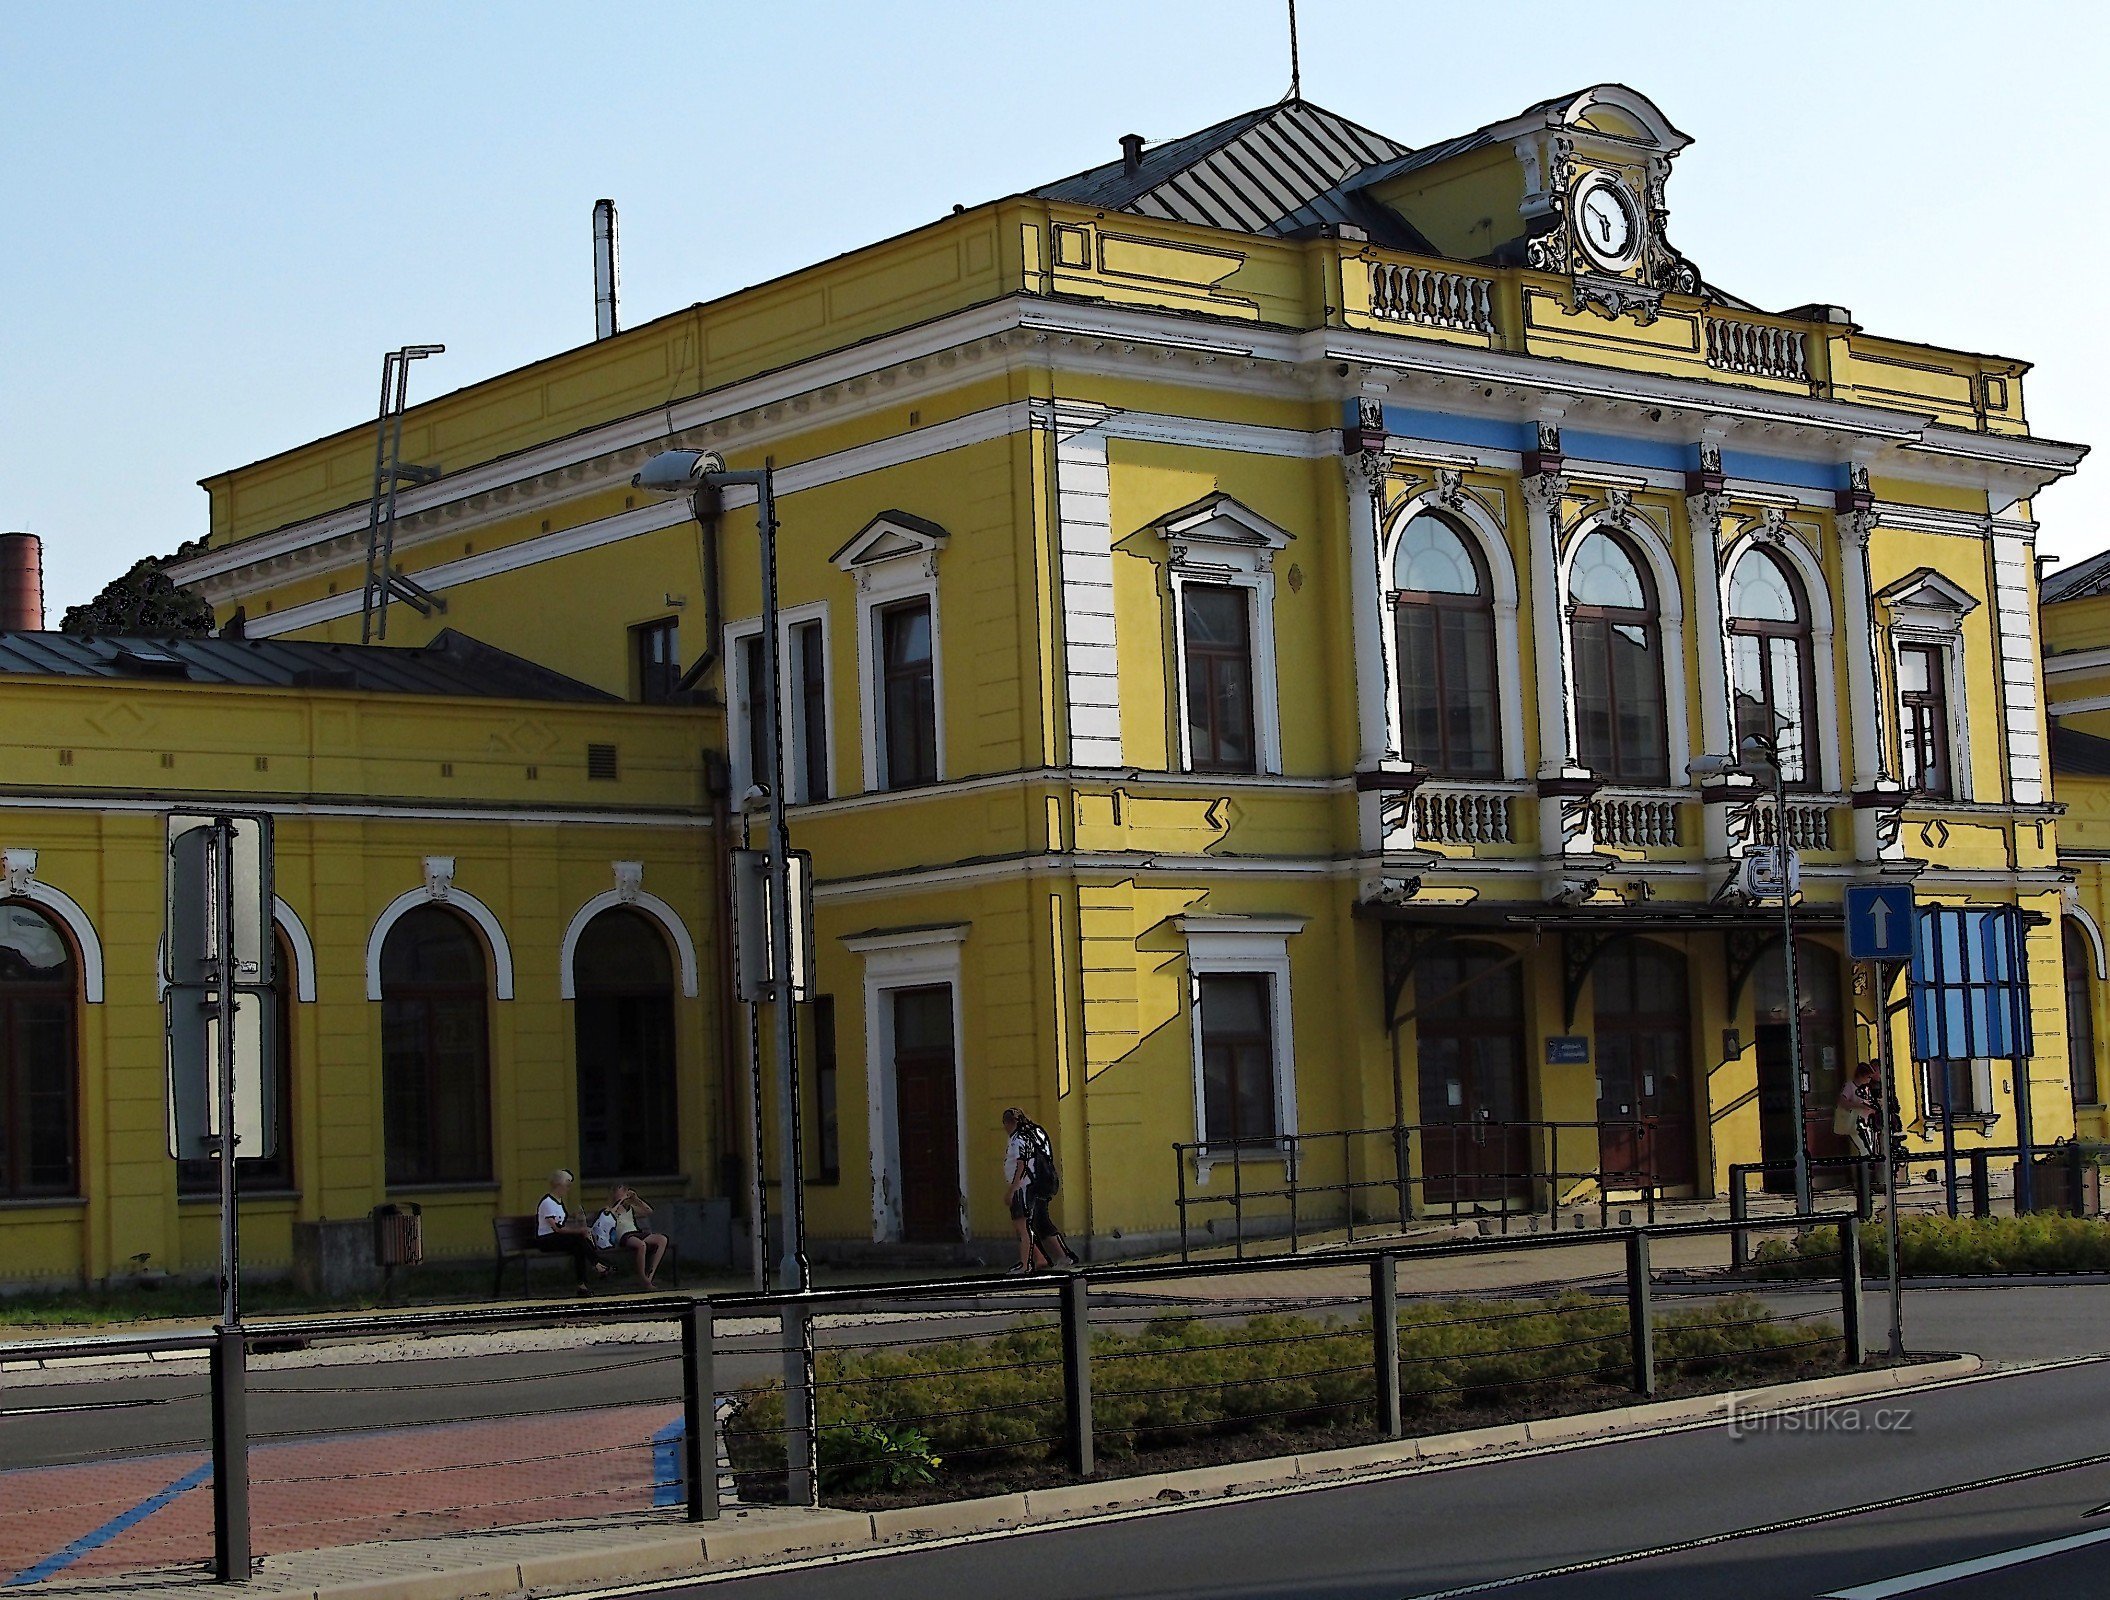 Šumperk - the main building of the train station